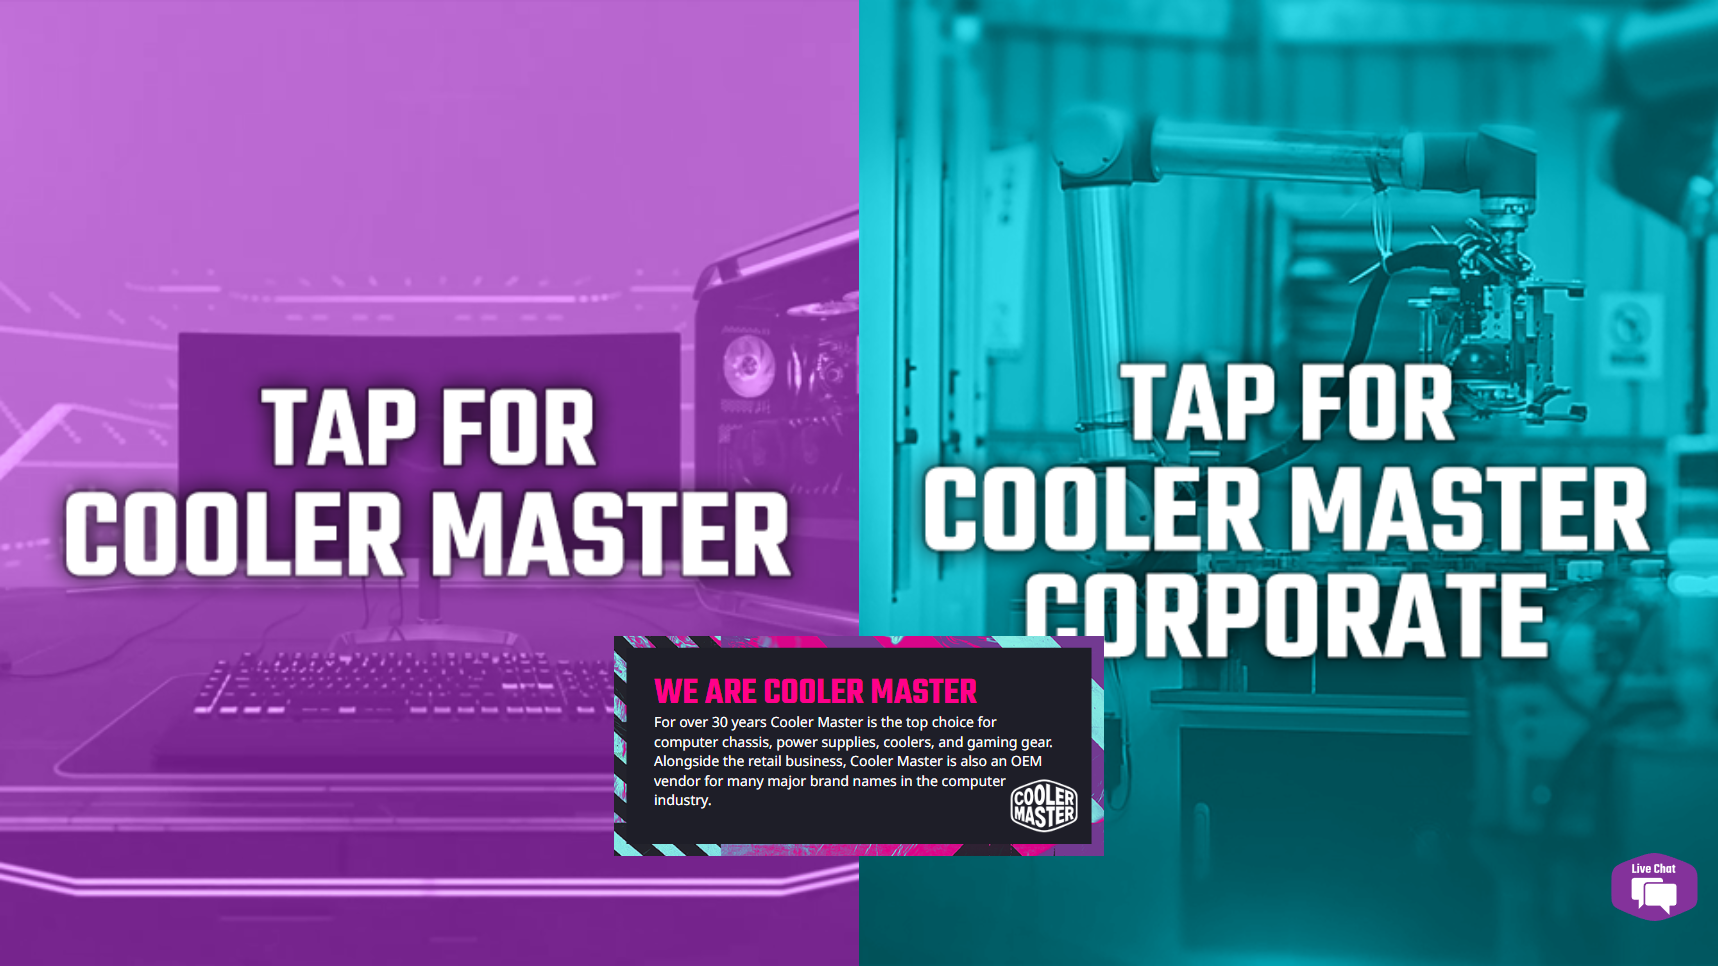 Cooler Master - Computer Chassis Manufacturer